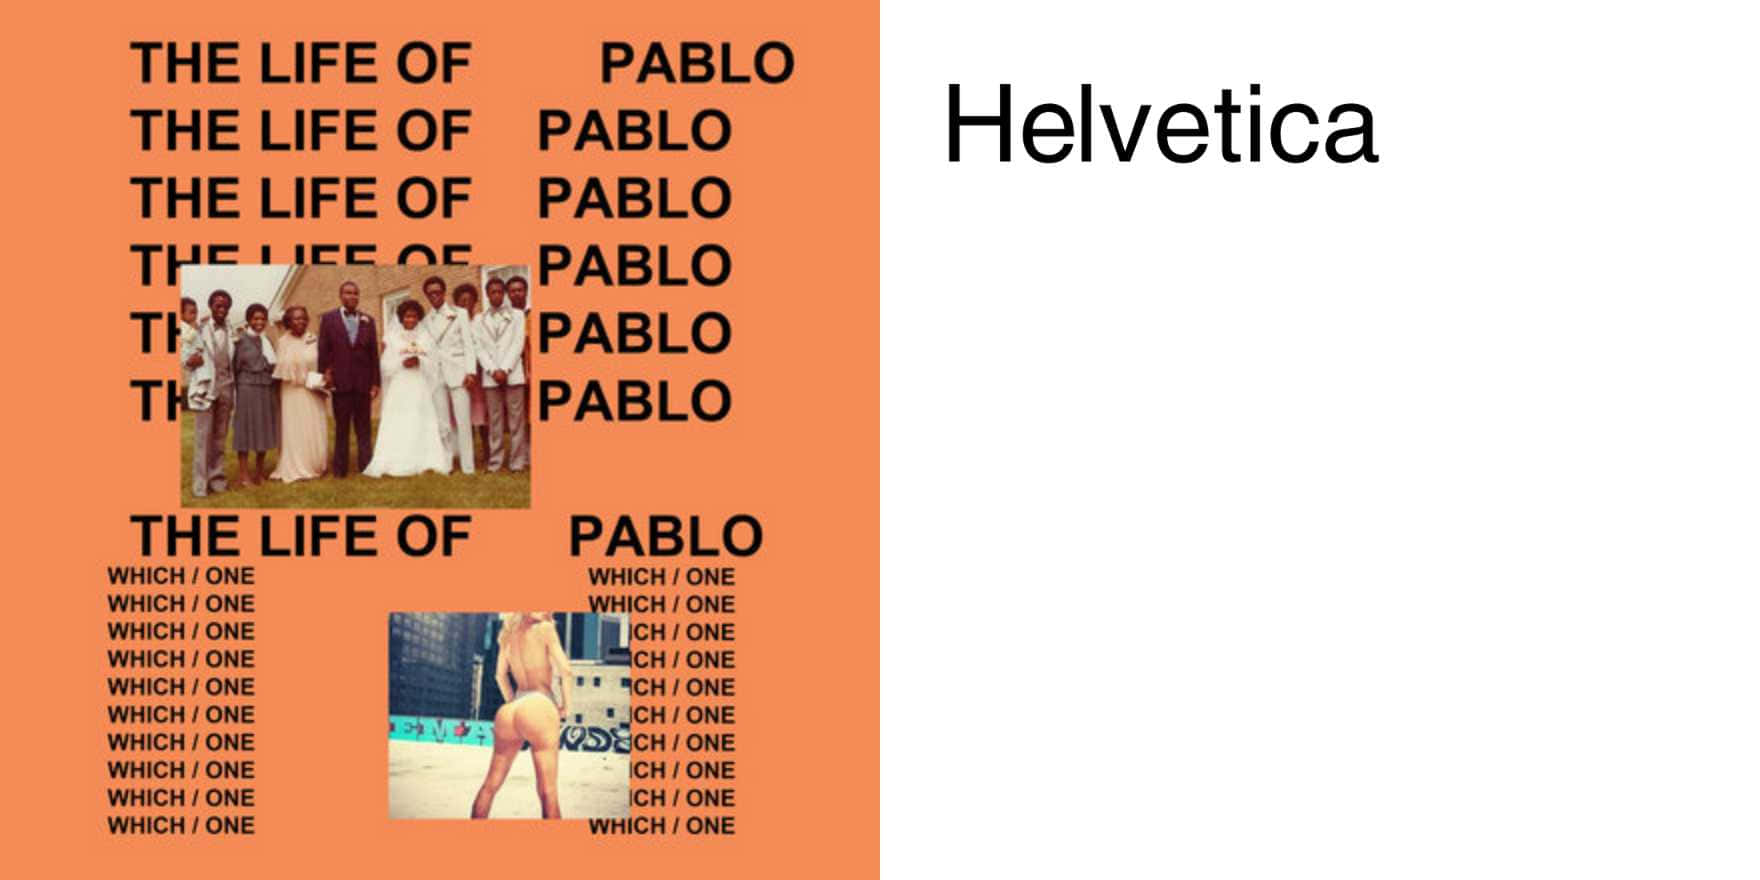 Kanye Life of Pablo Tour 4K wallpaper by UtopiaOfInk on DeviantArt